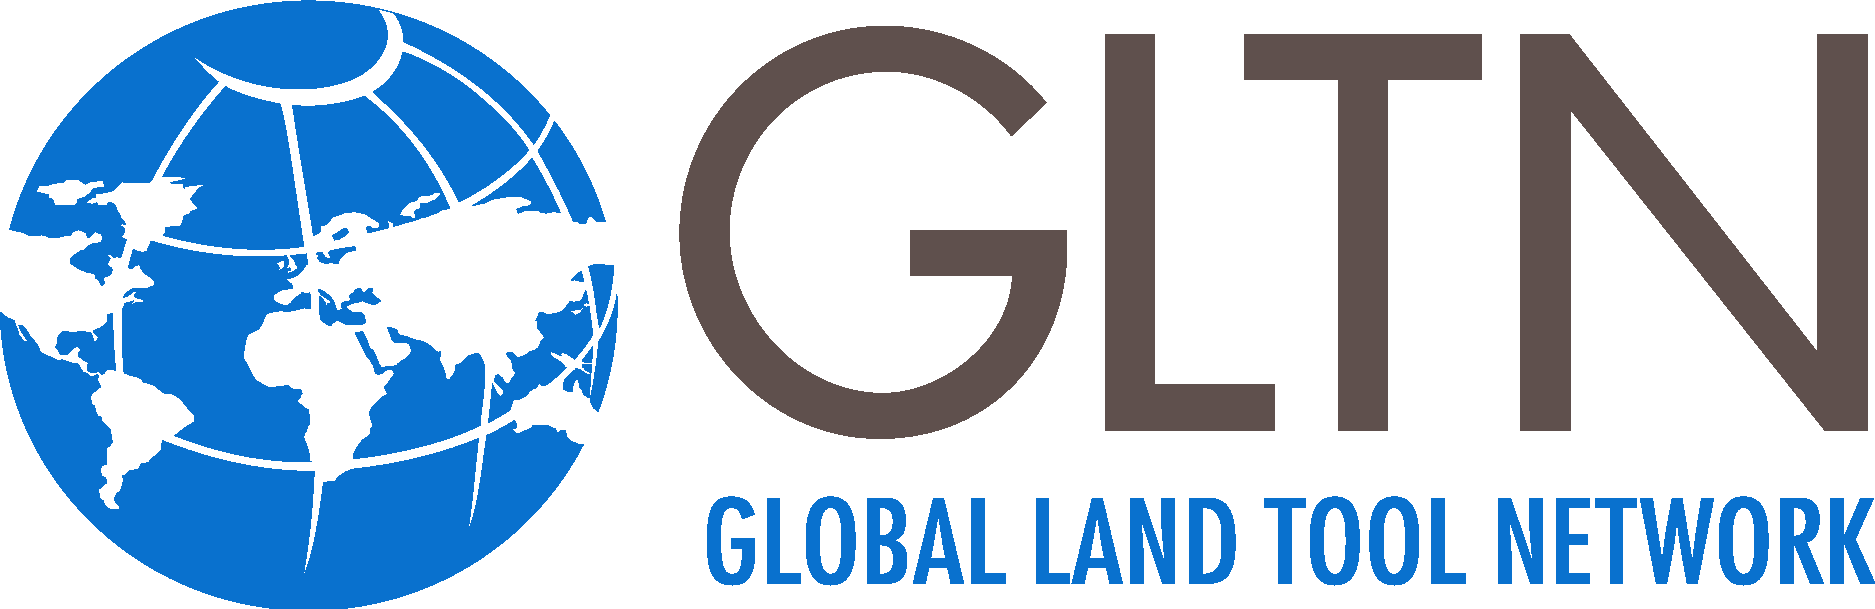 Global Land Tool Network Logo Vector